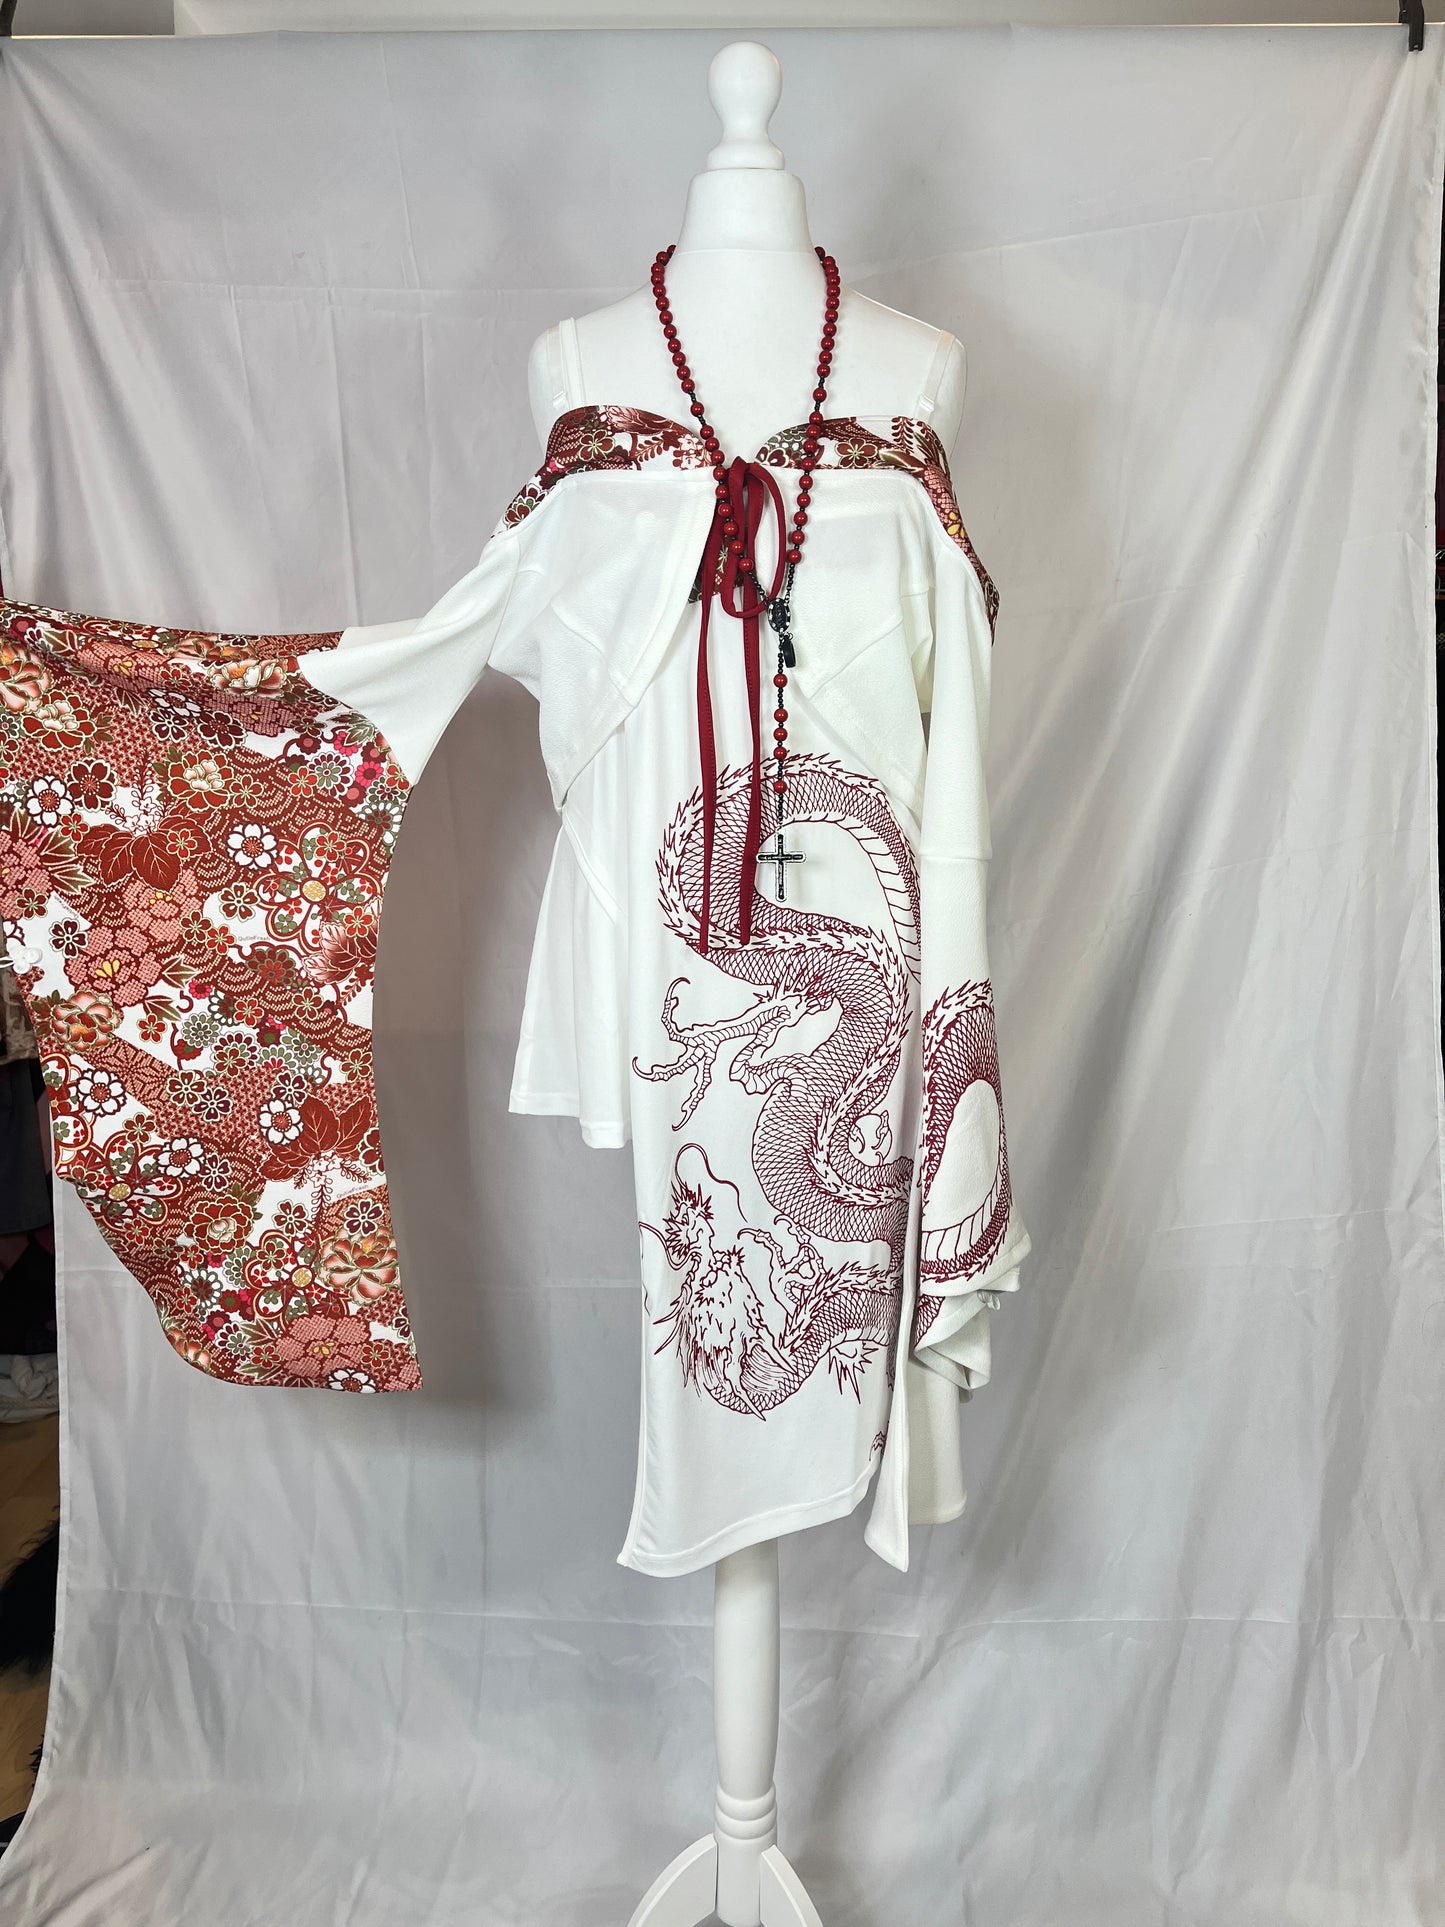 Qutie Frash Red Floral Kimono 5P Set